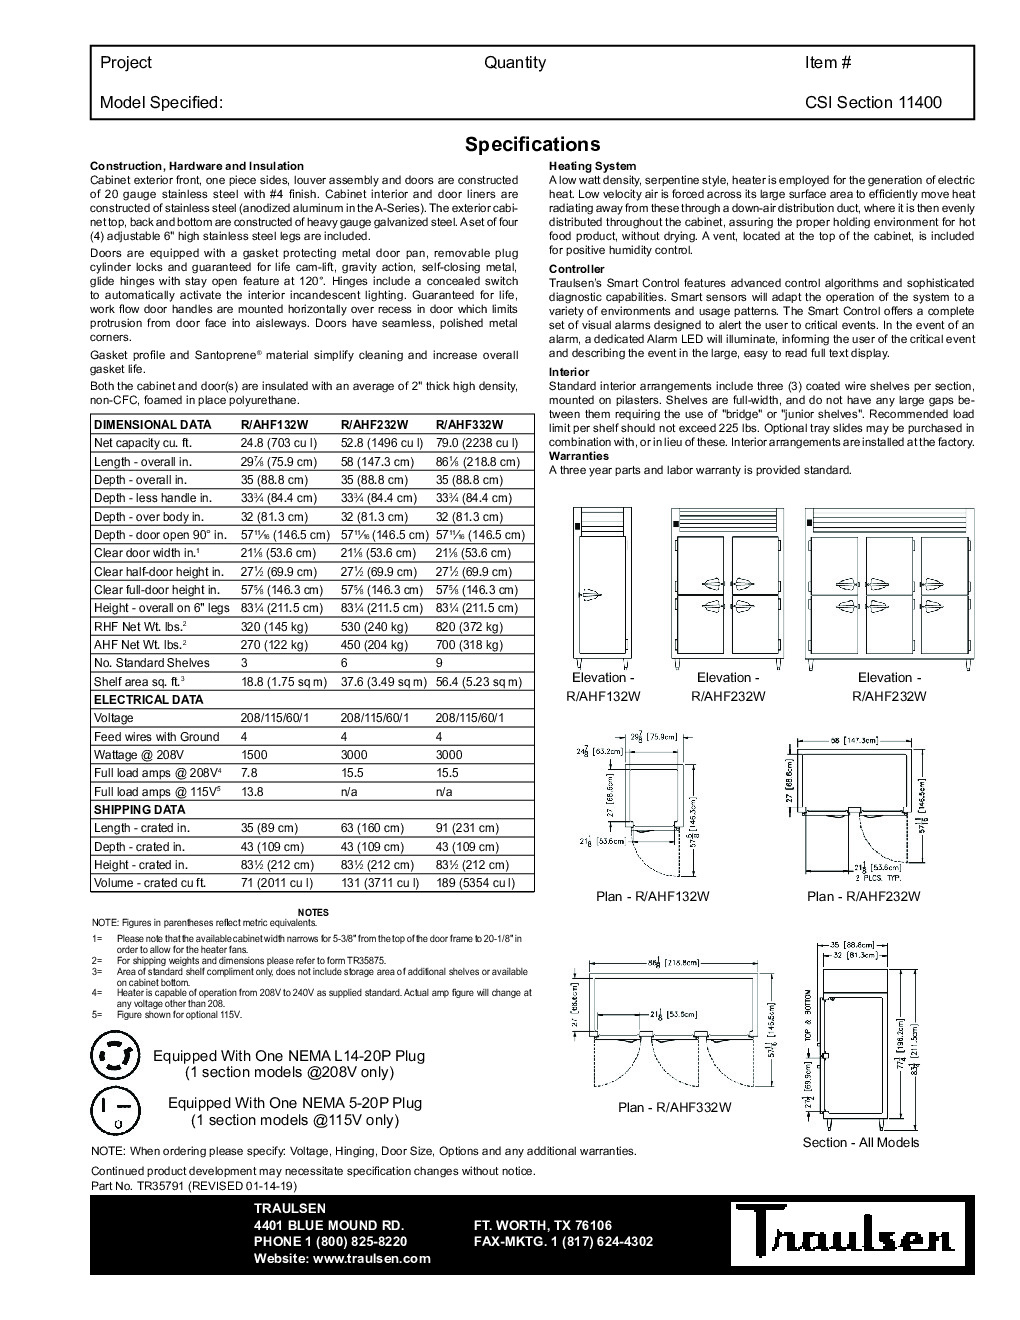 Traulsen RHF332W-HHS Reach-In Heated Cabinet